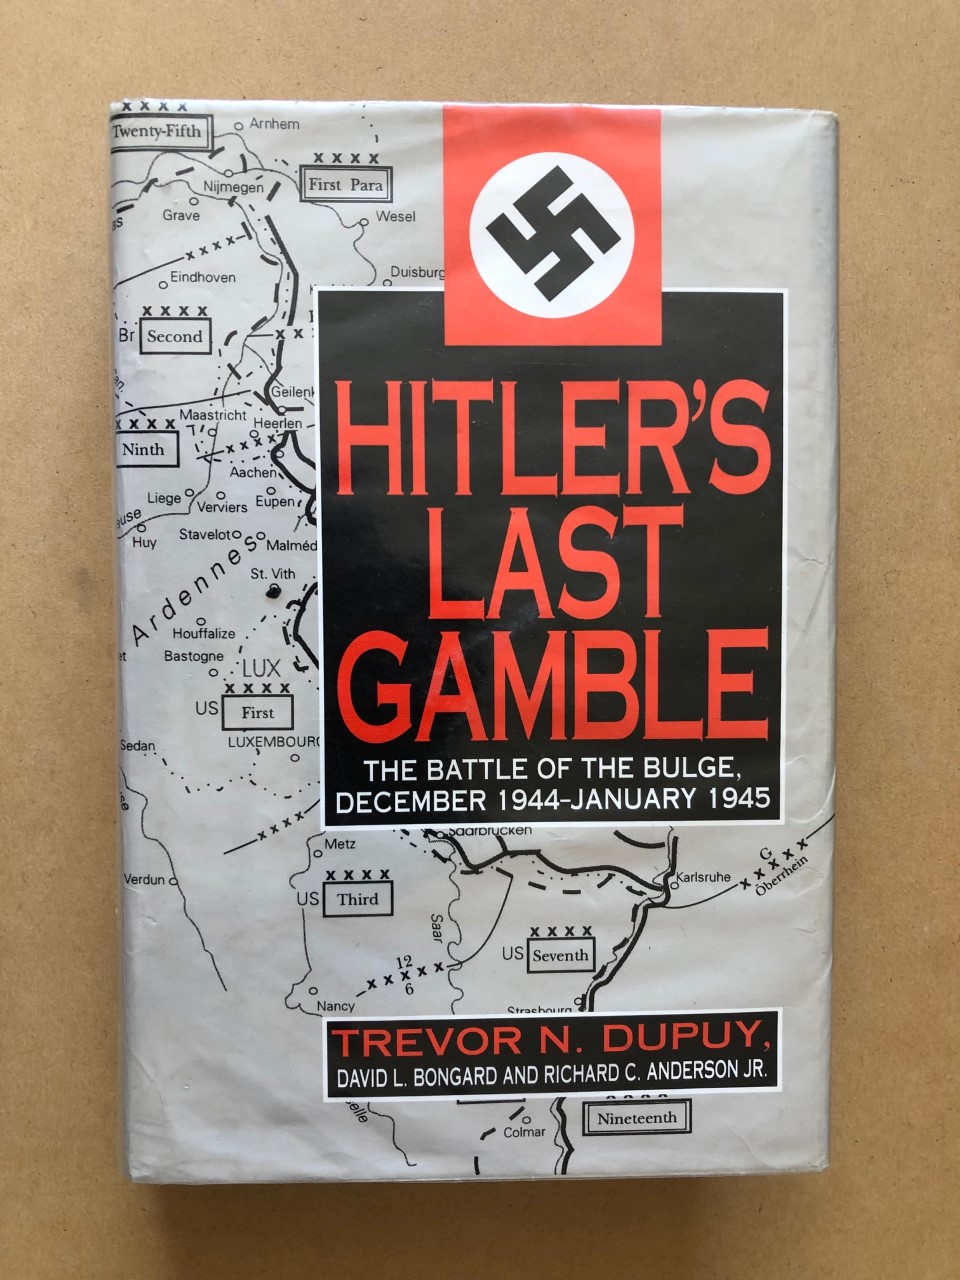 Hitler's Last Gamble: The Battle of the Bulge, December 1944 - January 1945 - Dupuy, Bongard & Anderson